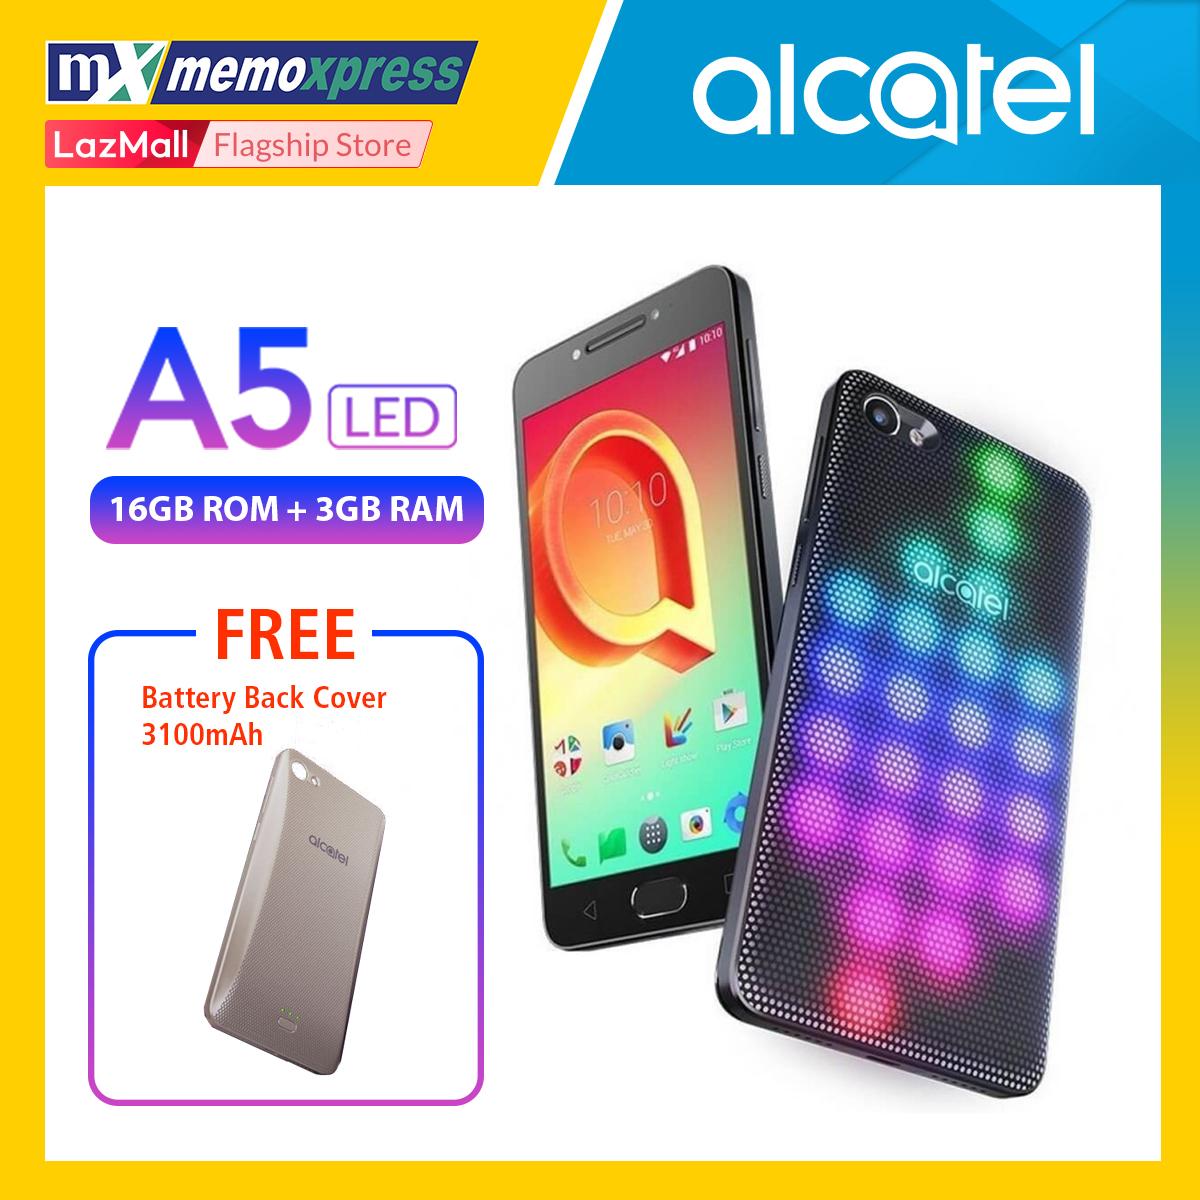 Alcatel Phone Philippines Alcatel Mobile For Sale Prices